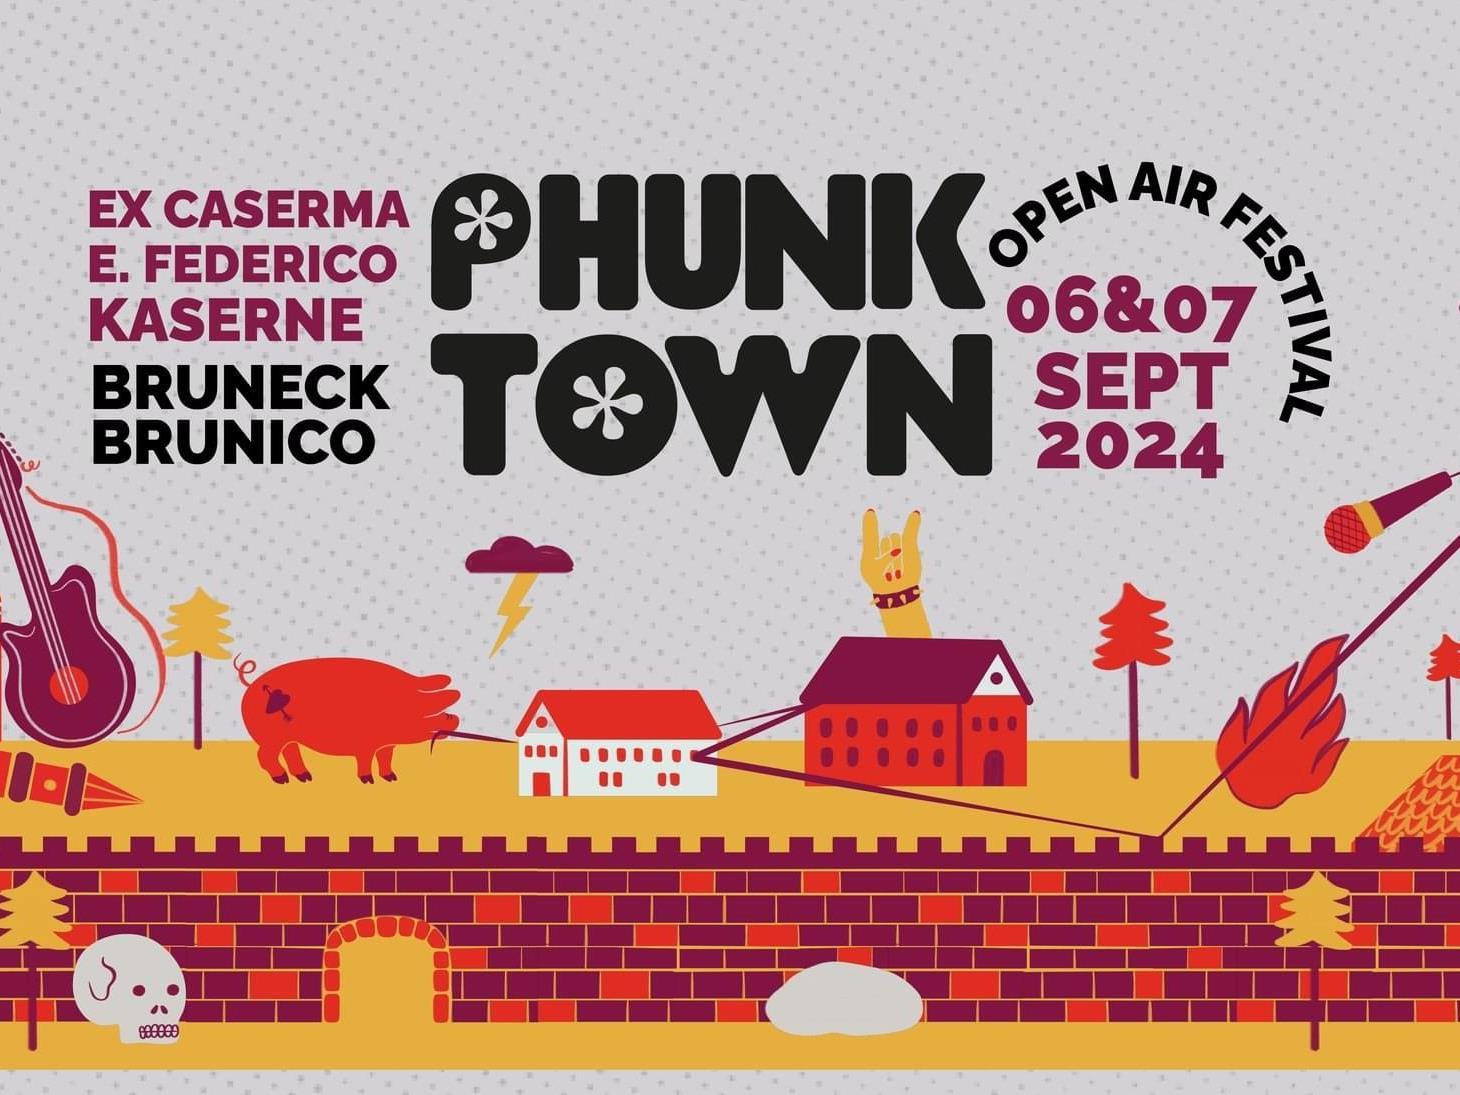 Phunk Town Open Air